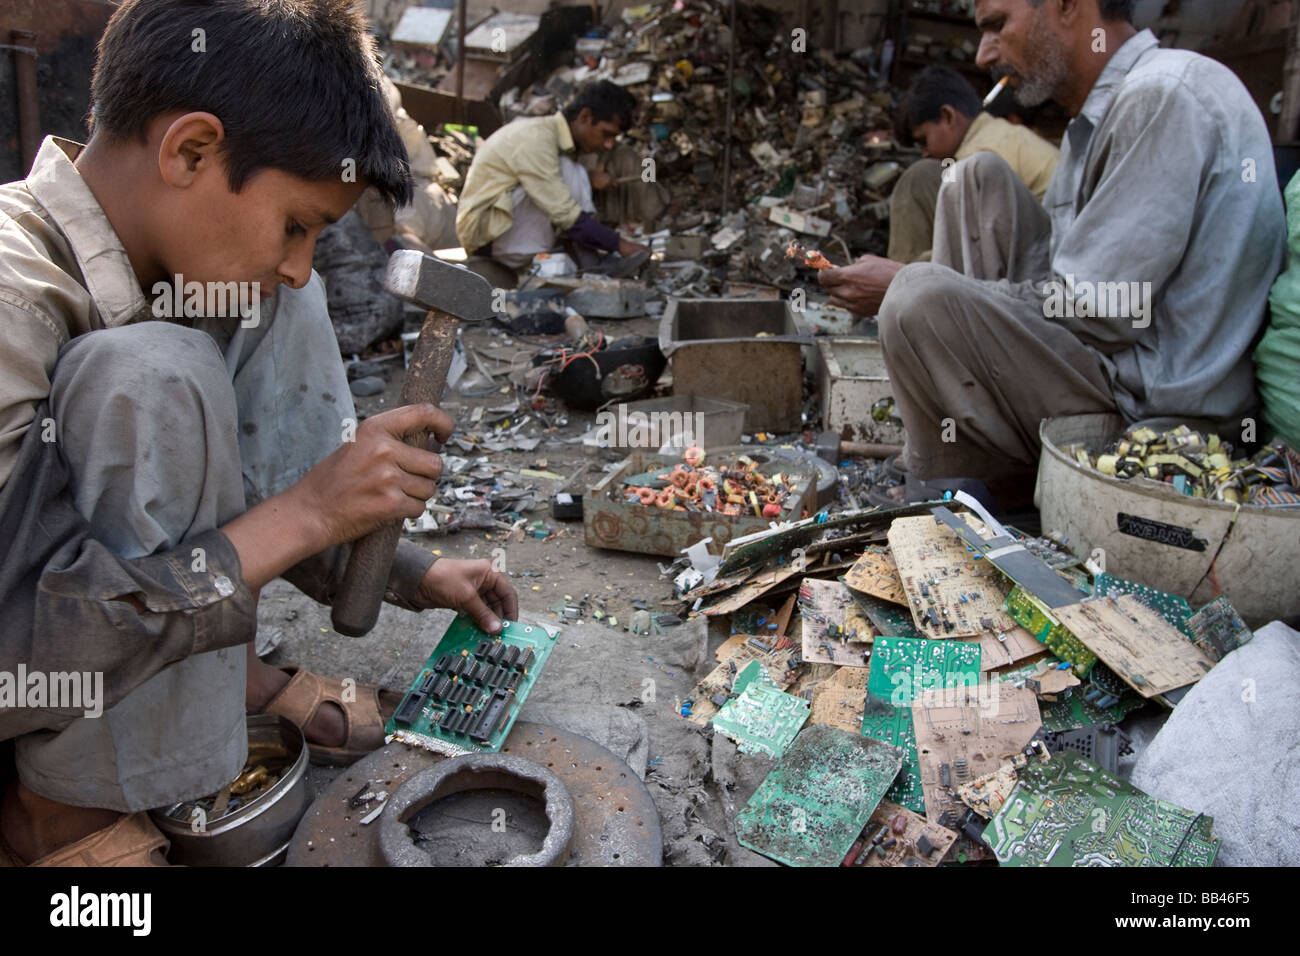 Electronics recycling in Karachi, Pakistan Stock Photo: 24064521 - Alamy